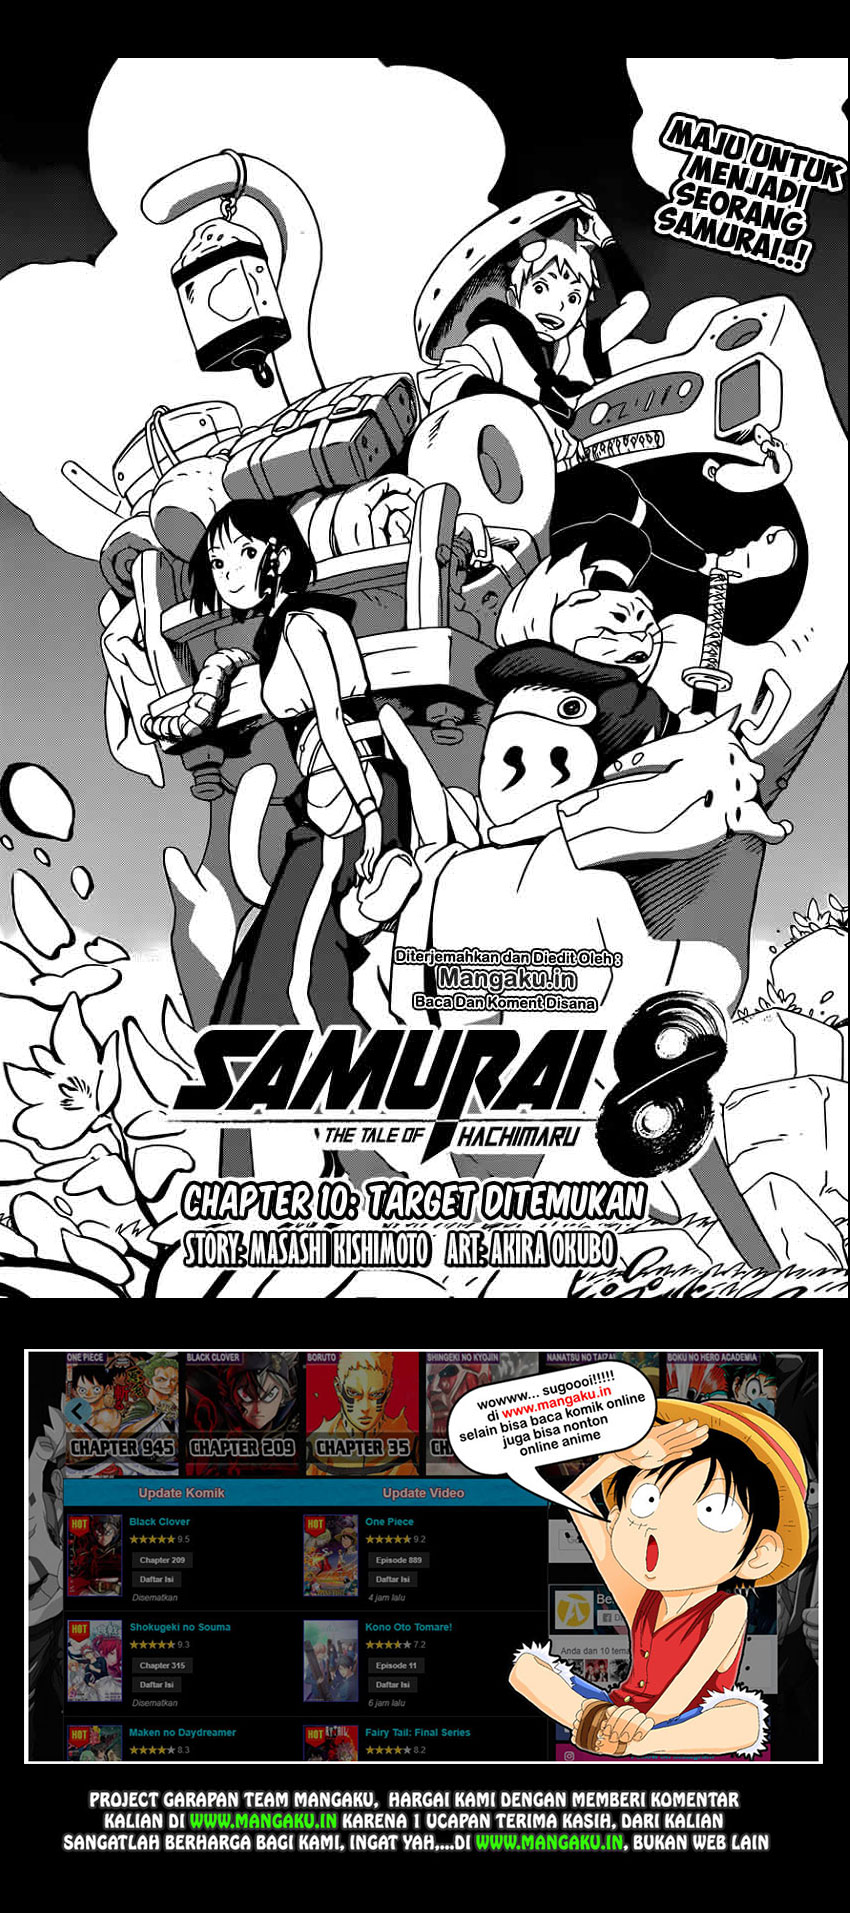 Samurai 8: Tales of Hachimaru Chapter 10